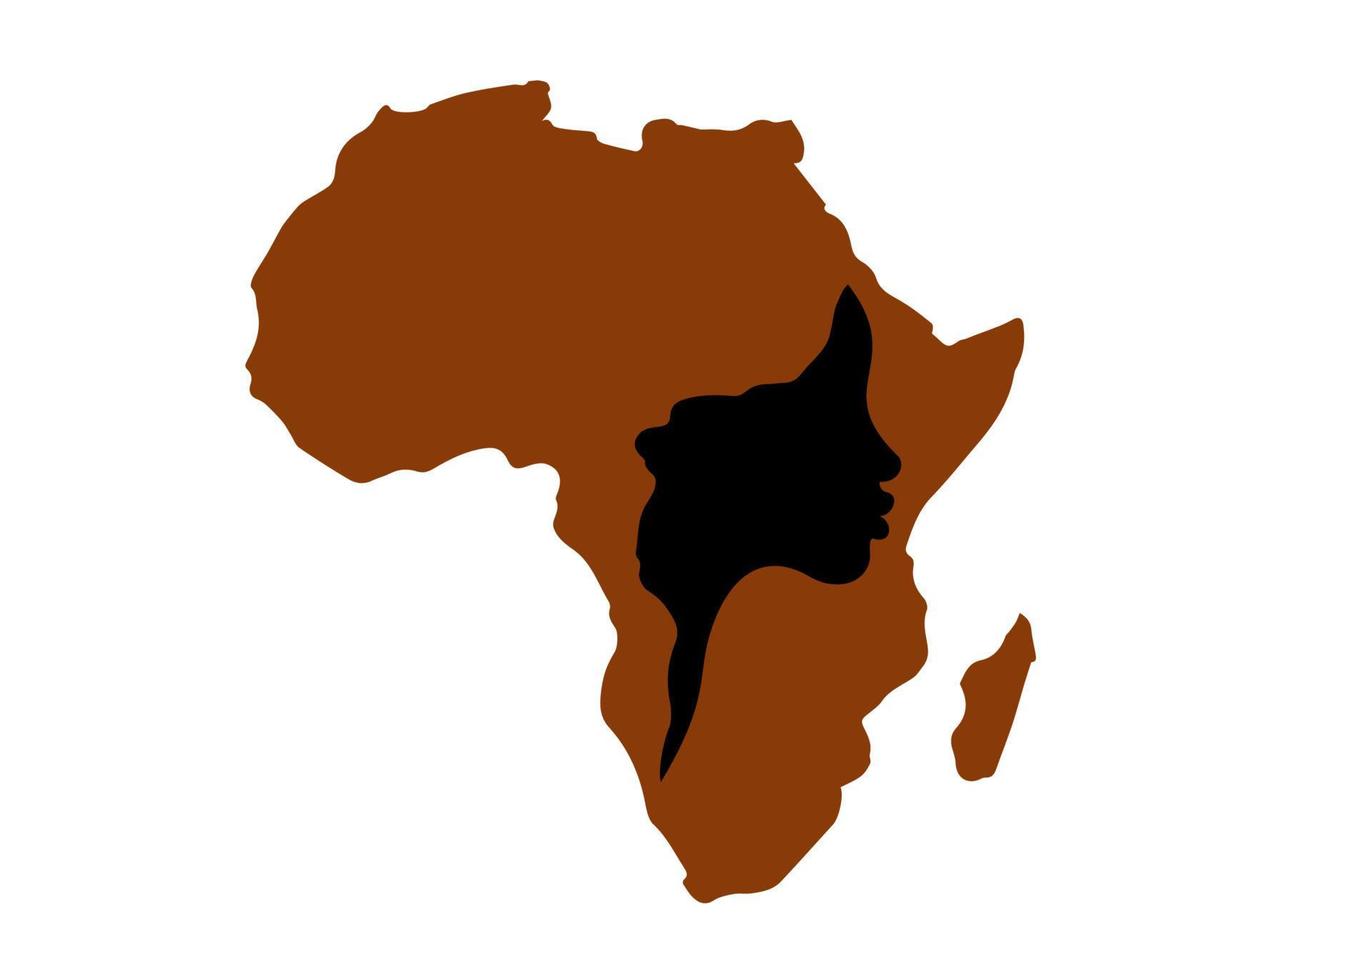 concepto de mujer africana, silueta de perfil facial con turbante en forma de mapa de África. Plantilla de diseño de logotipo tribal con estampado afro colorido. ilustración vectorial aislado sobre fondo blanco vector